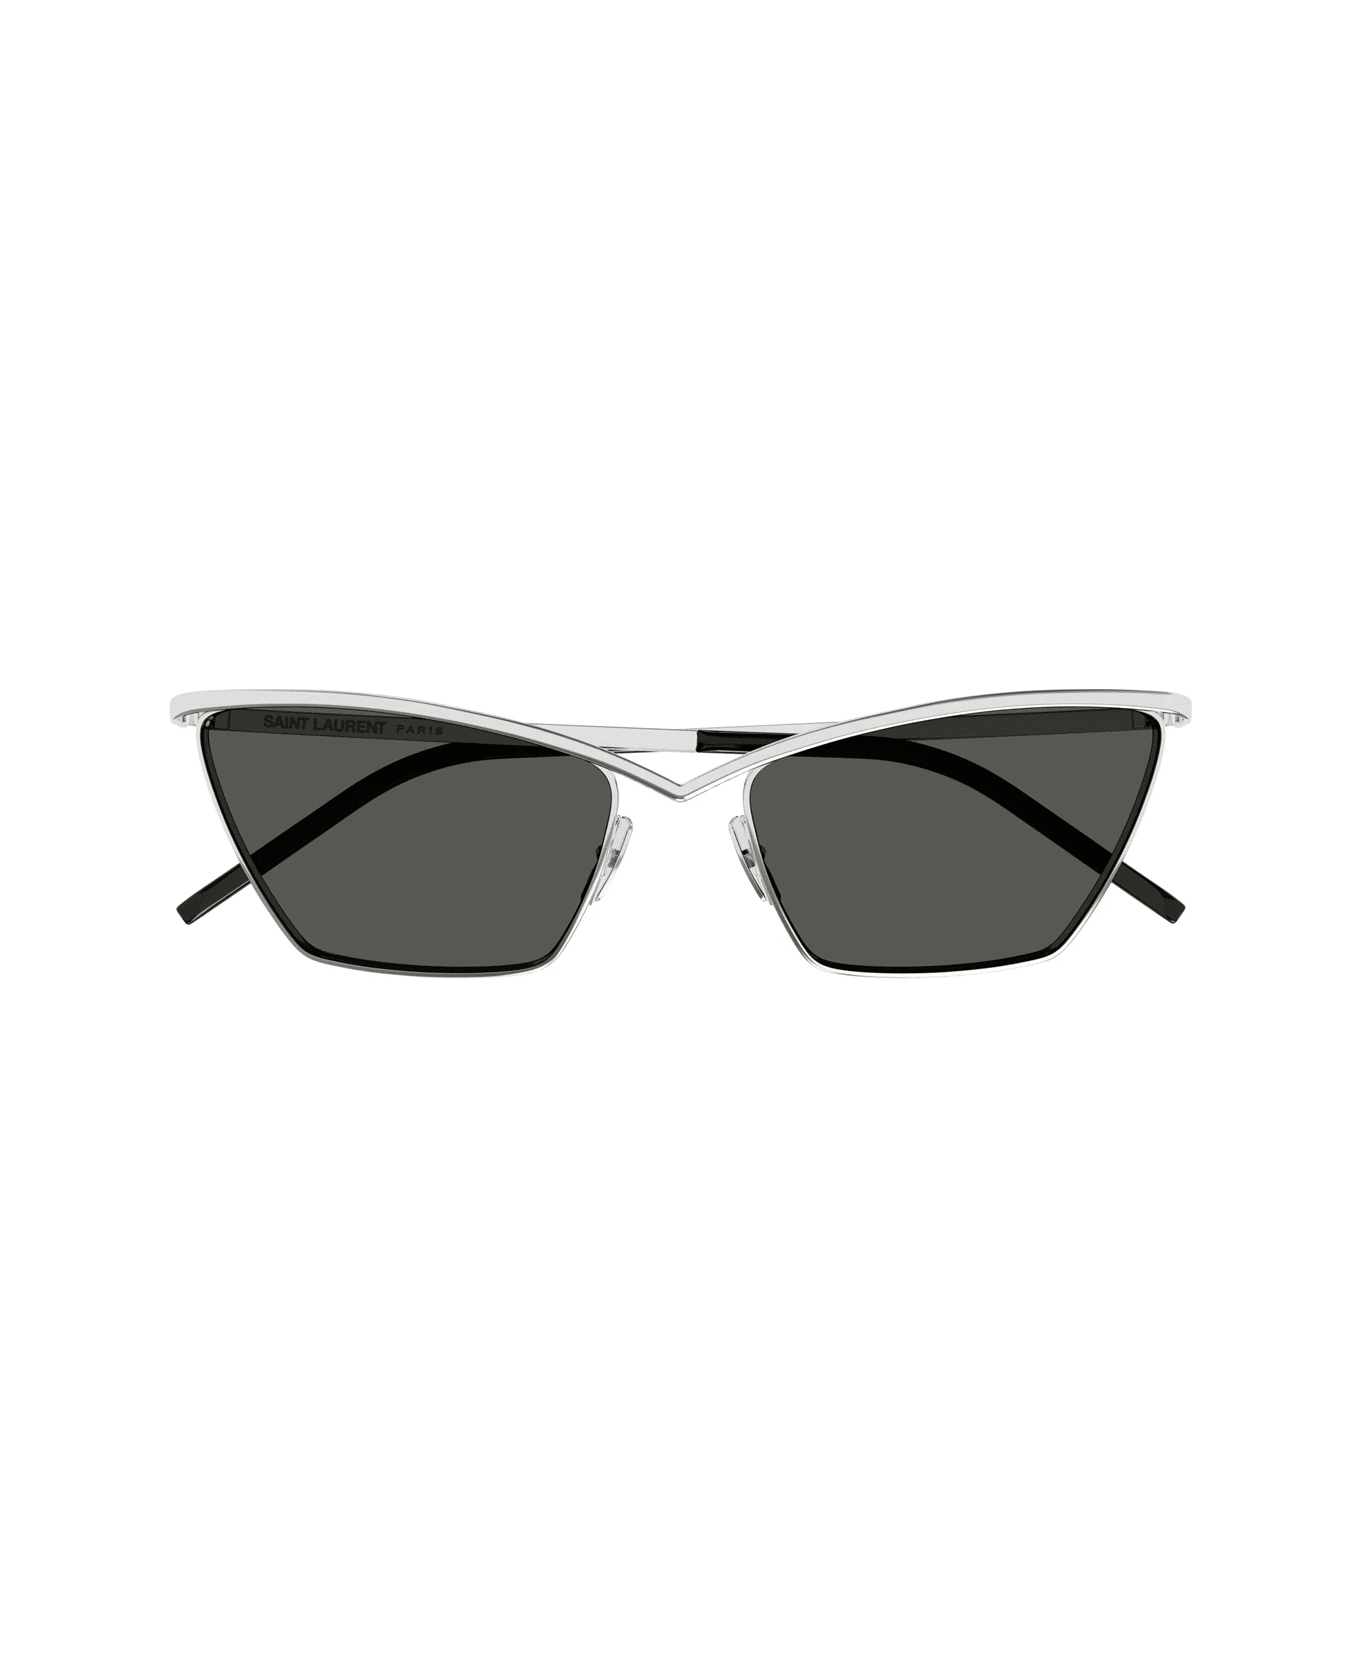 Saint Laurent Eyewear Sl 637 002 Sunglasses - Argento